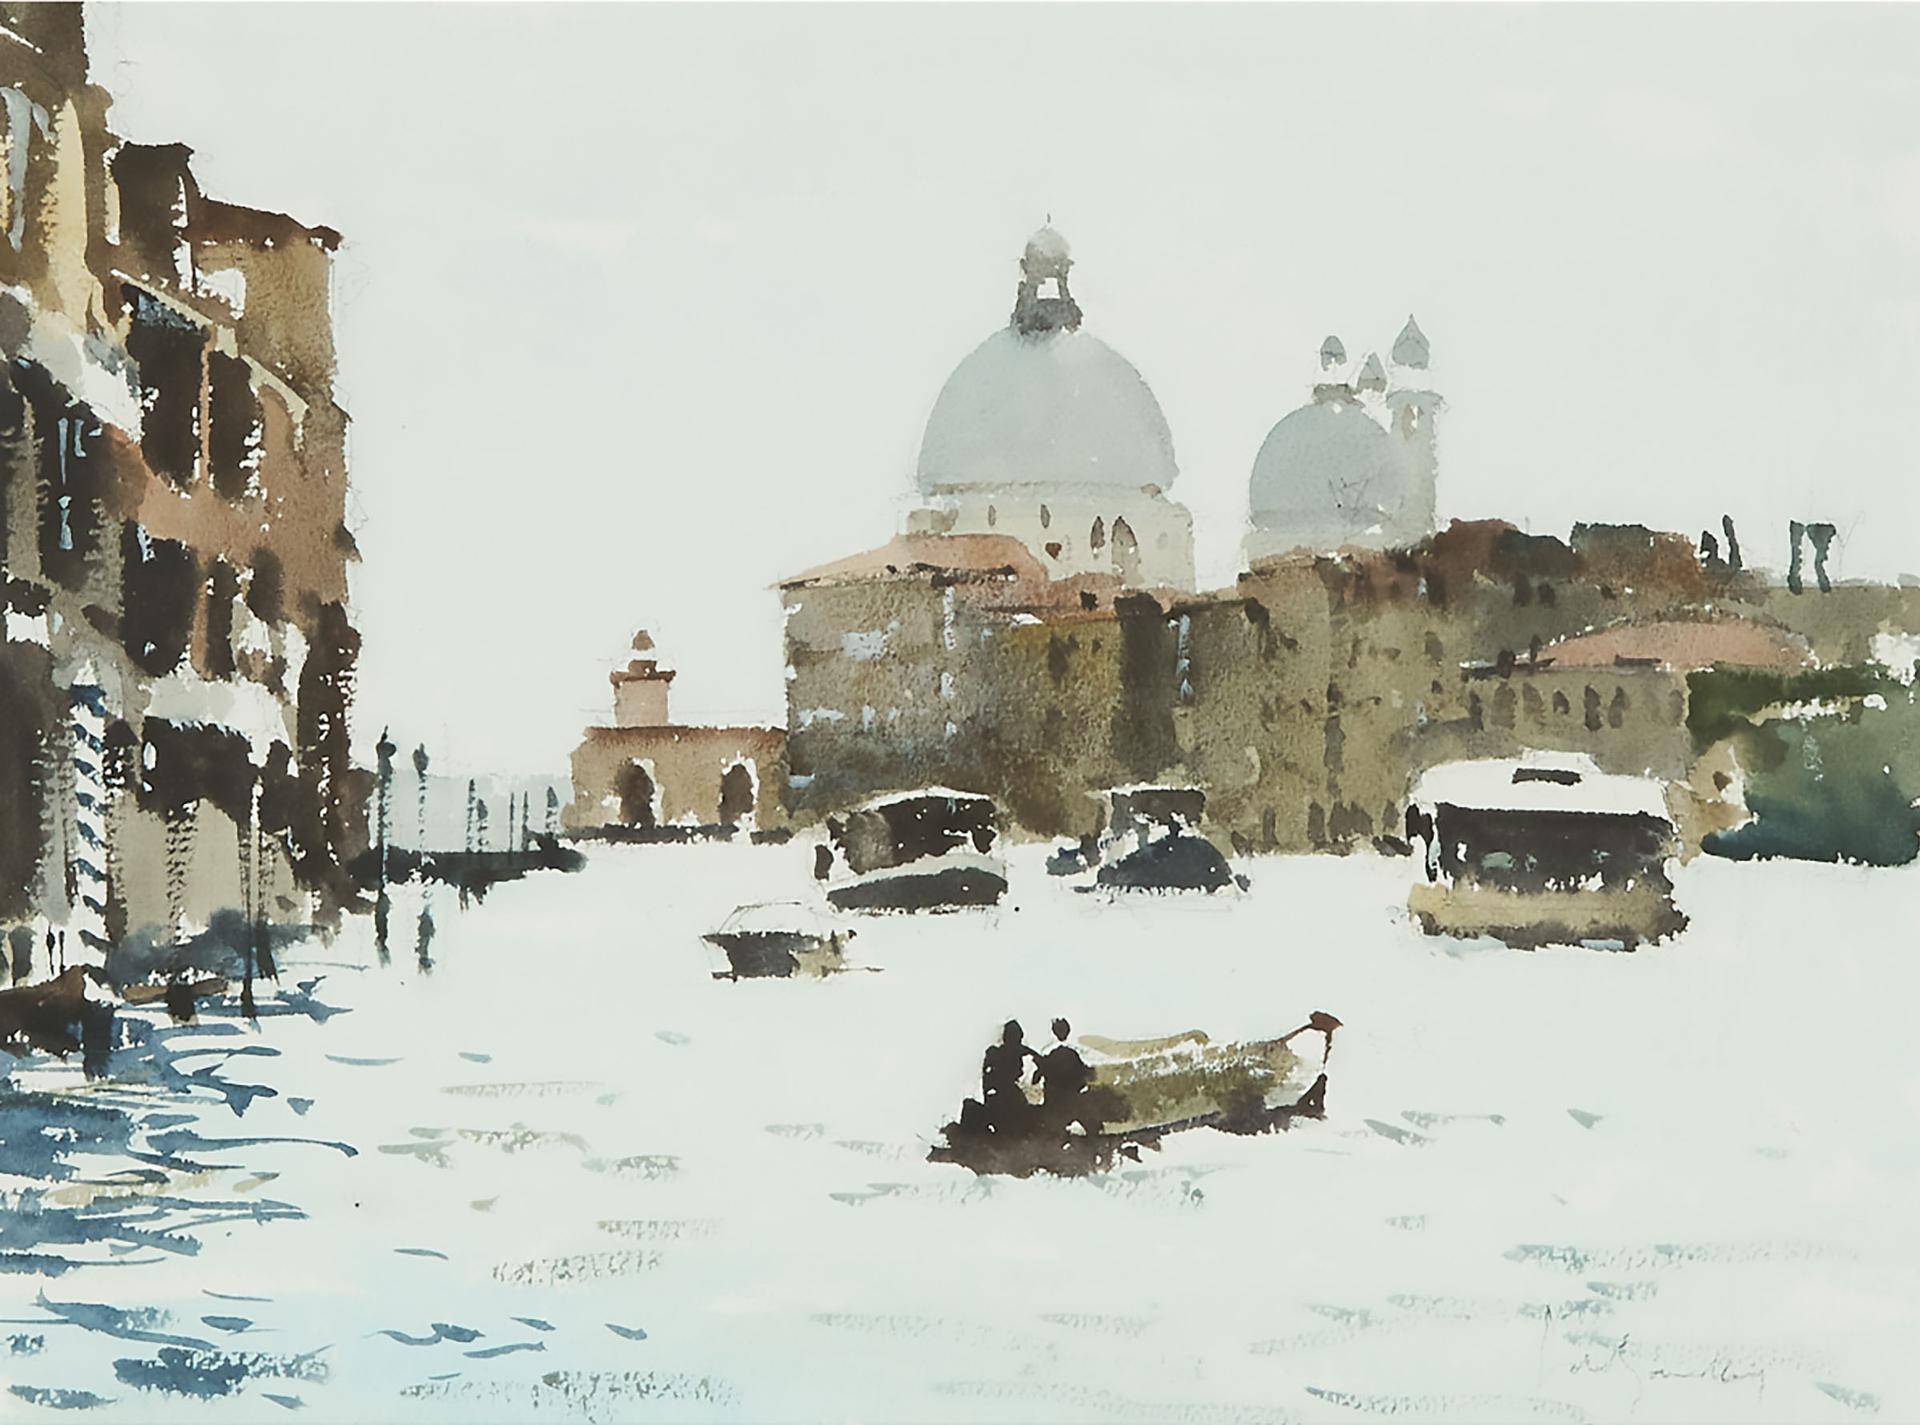 John Barkley (1964) - Vaporettos, Venice